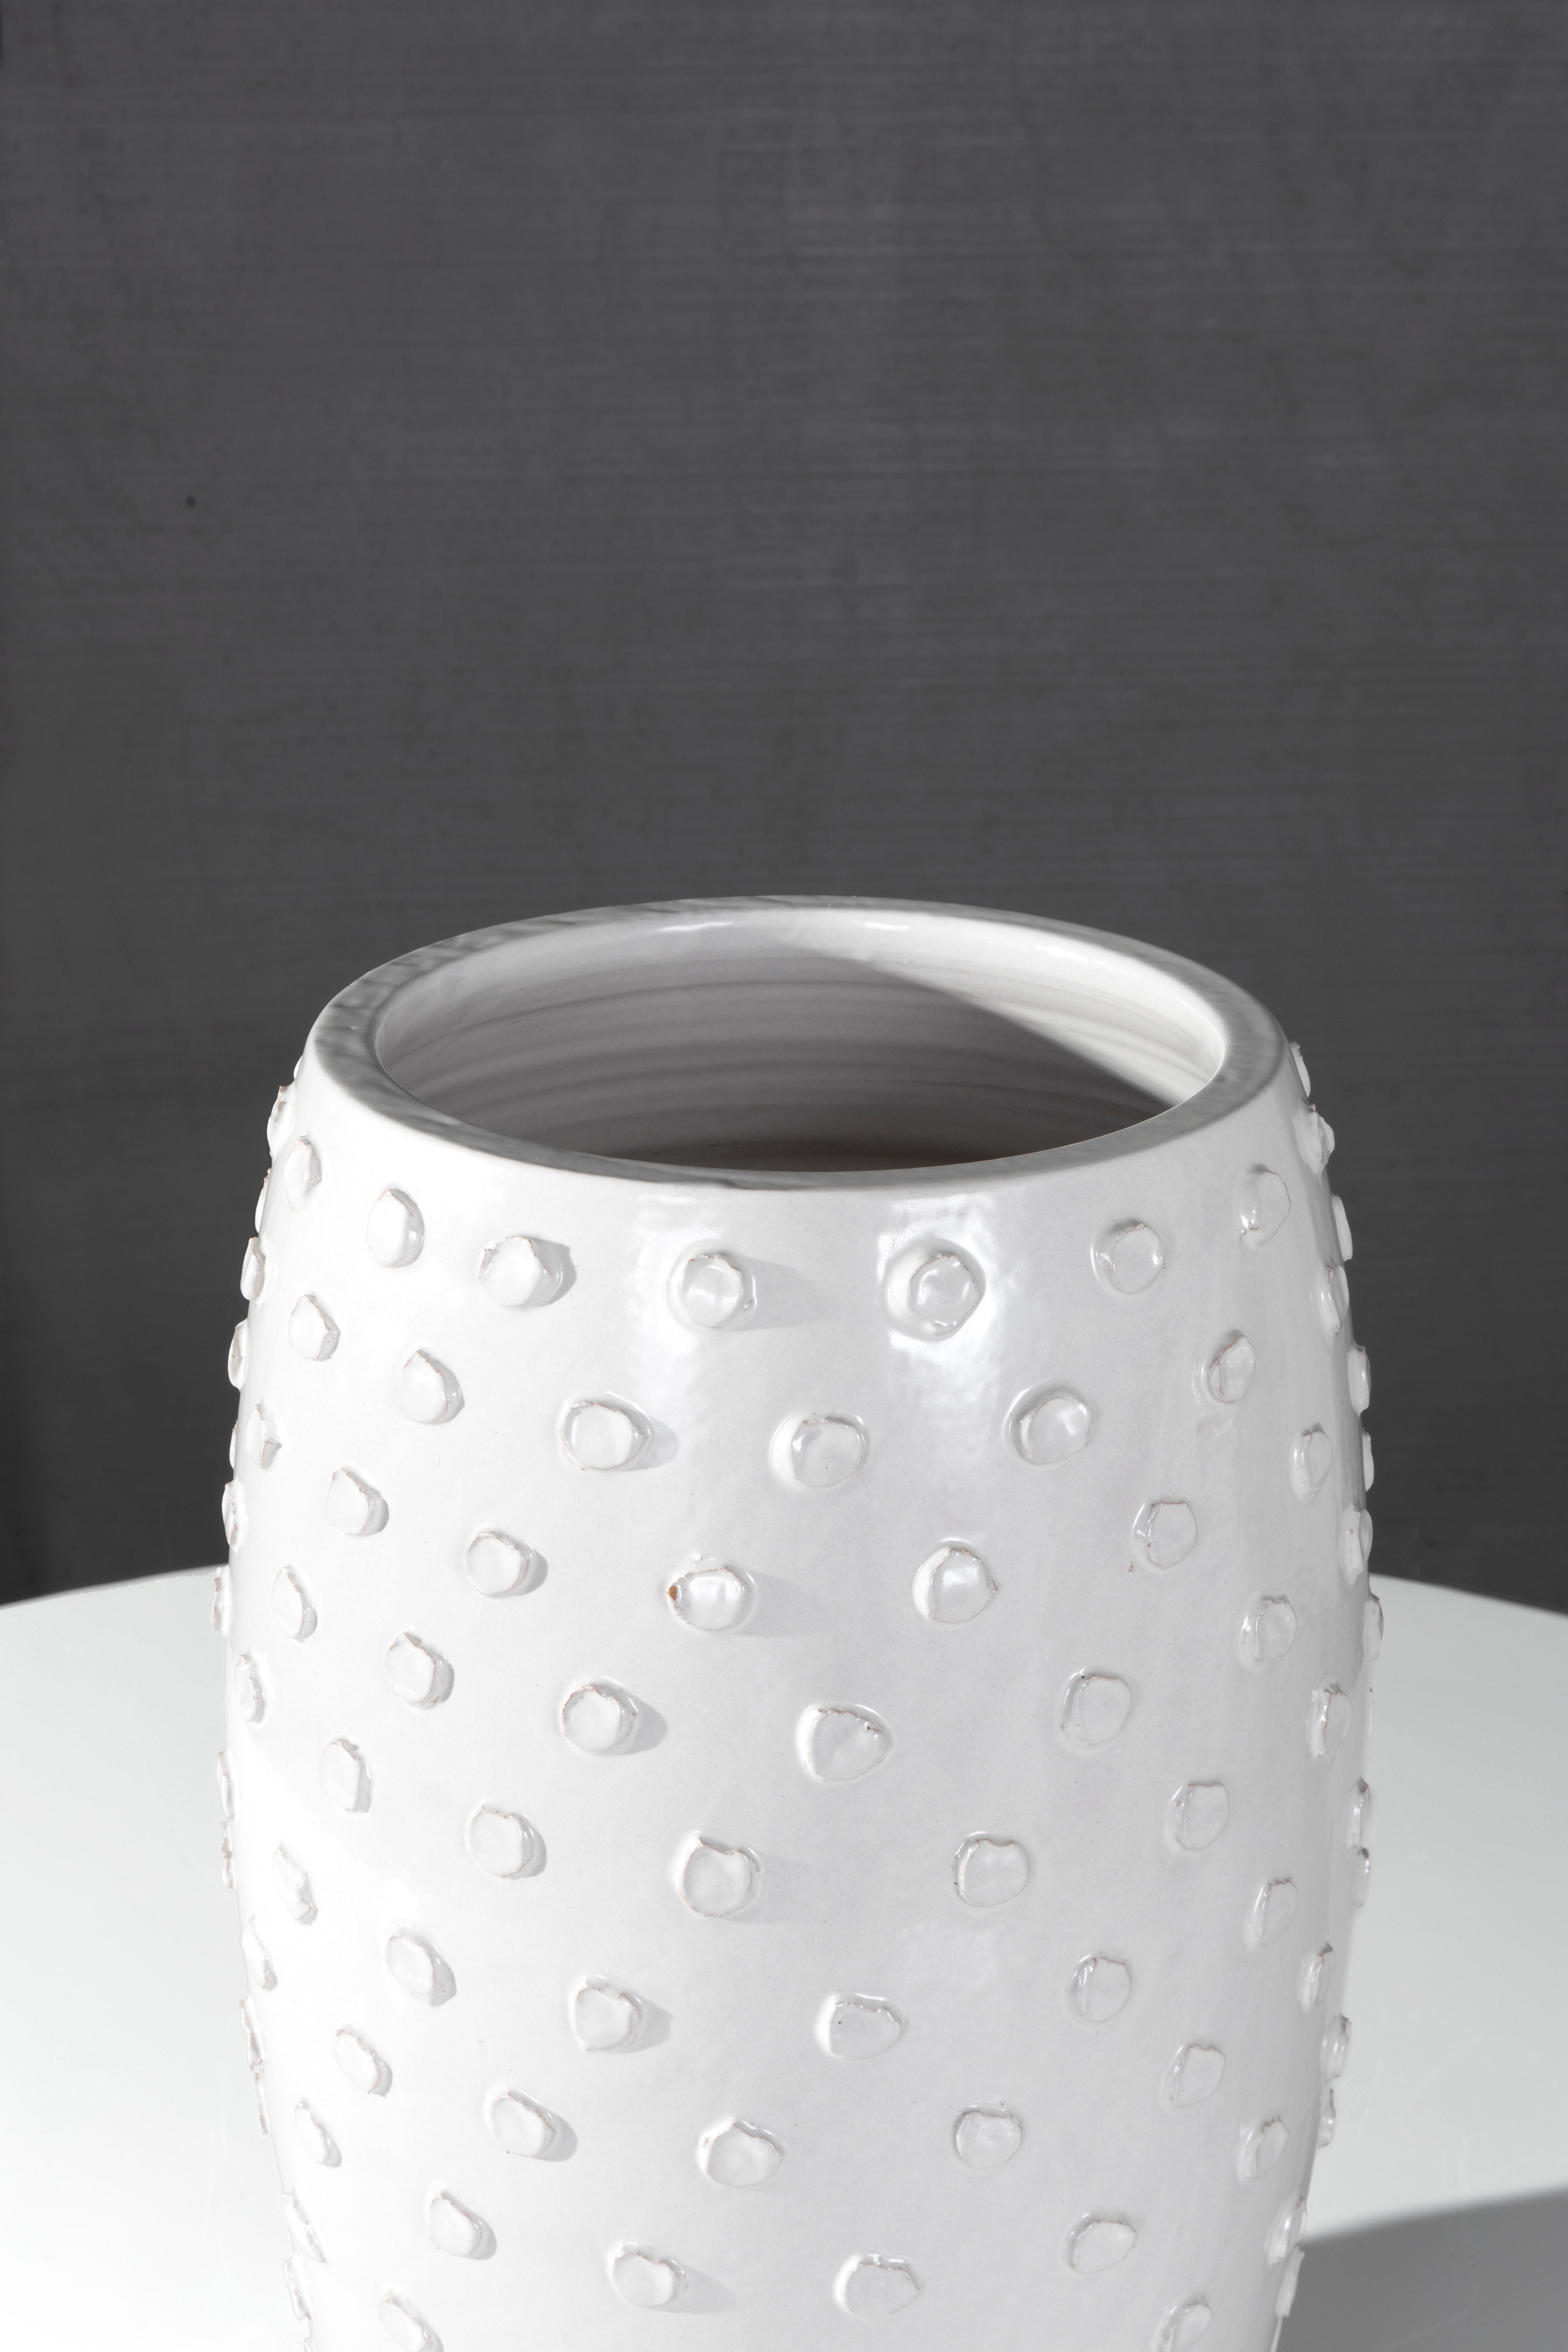 Organic Modern New Reng, Boru, Off-White Glazed Terracotta Vase with Dot Pattern For Sale